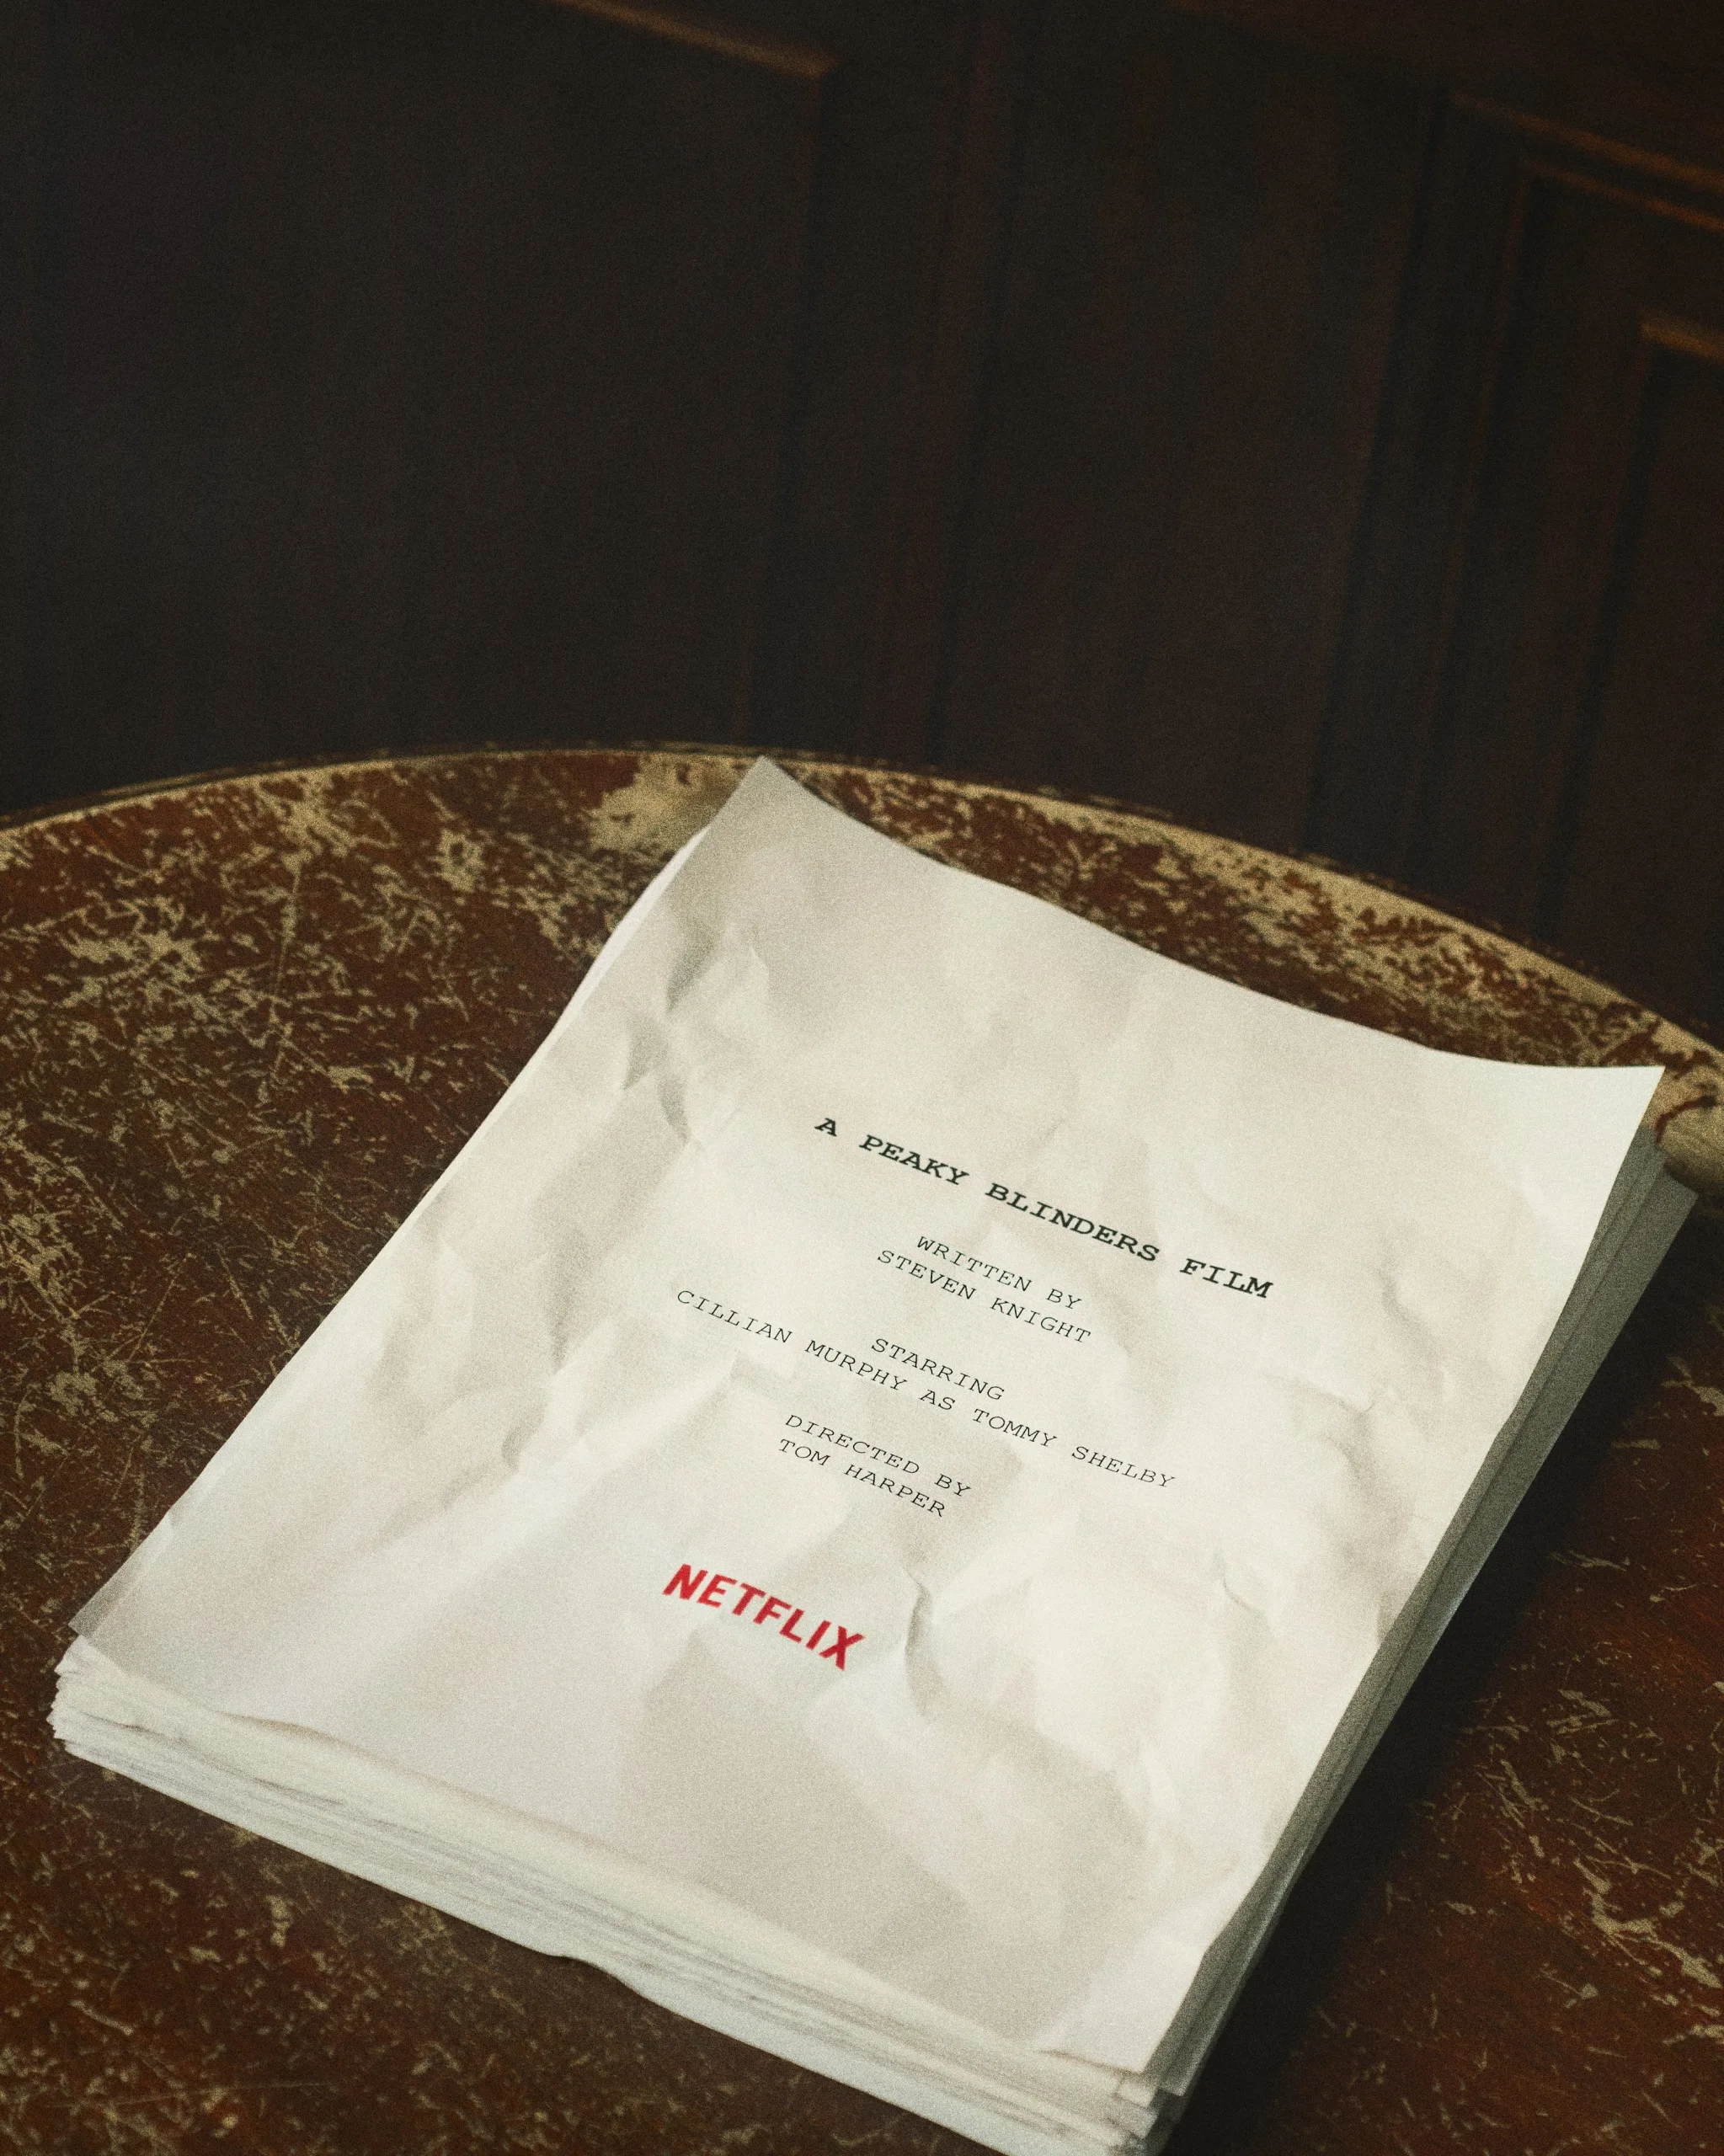 Netflix anuncia detalhes do filme "Peaky Blinders" com Cillian Murphy